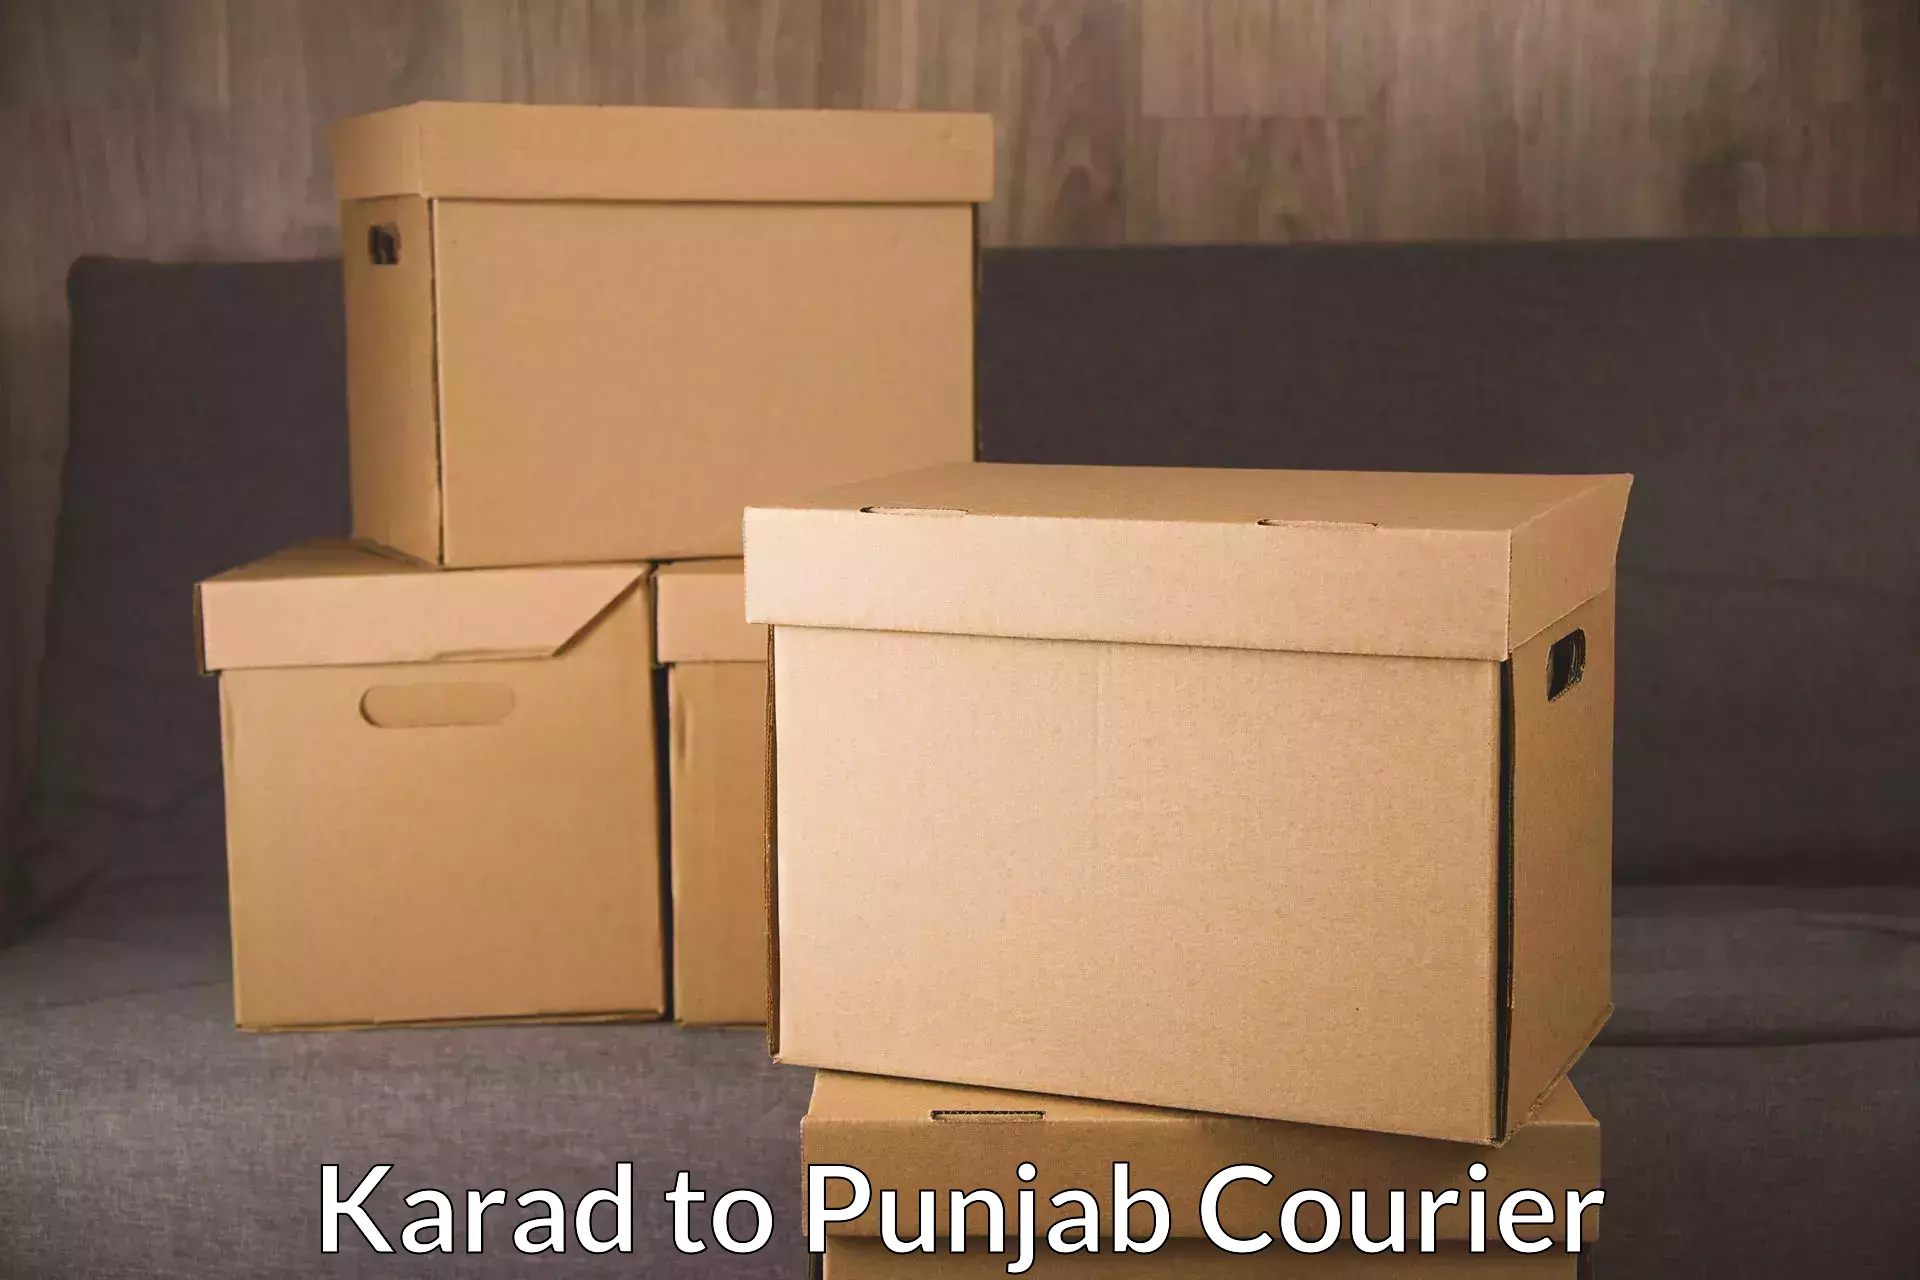 Sustainable shipping practices Karad to Punjab